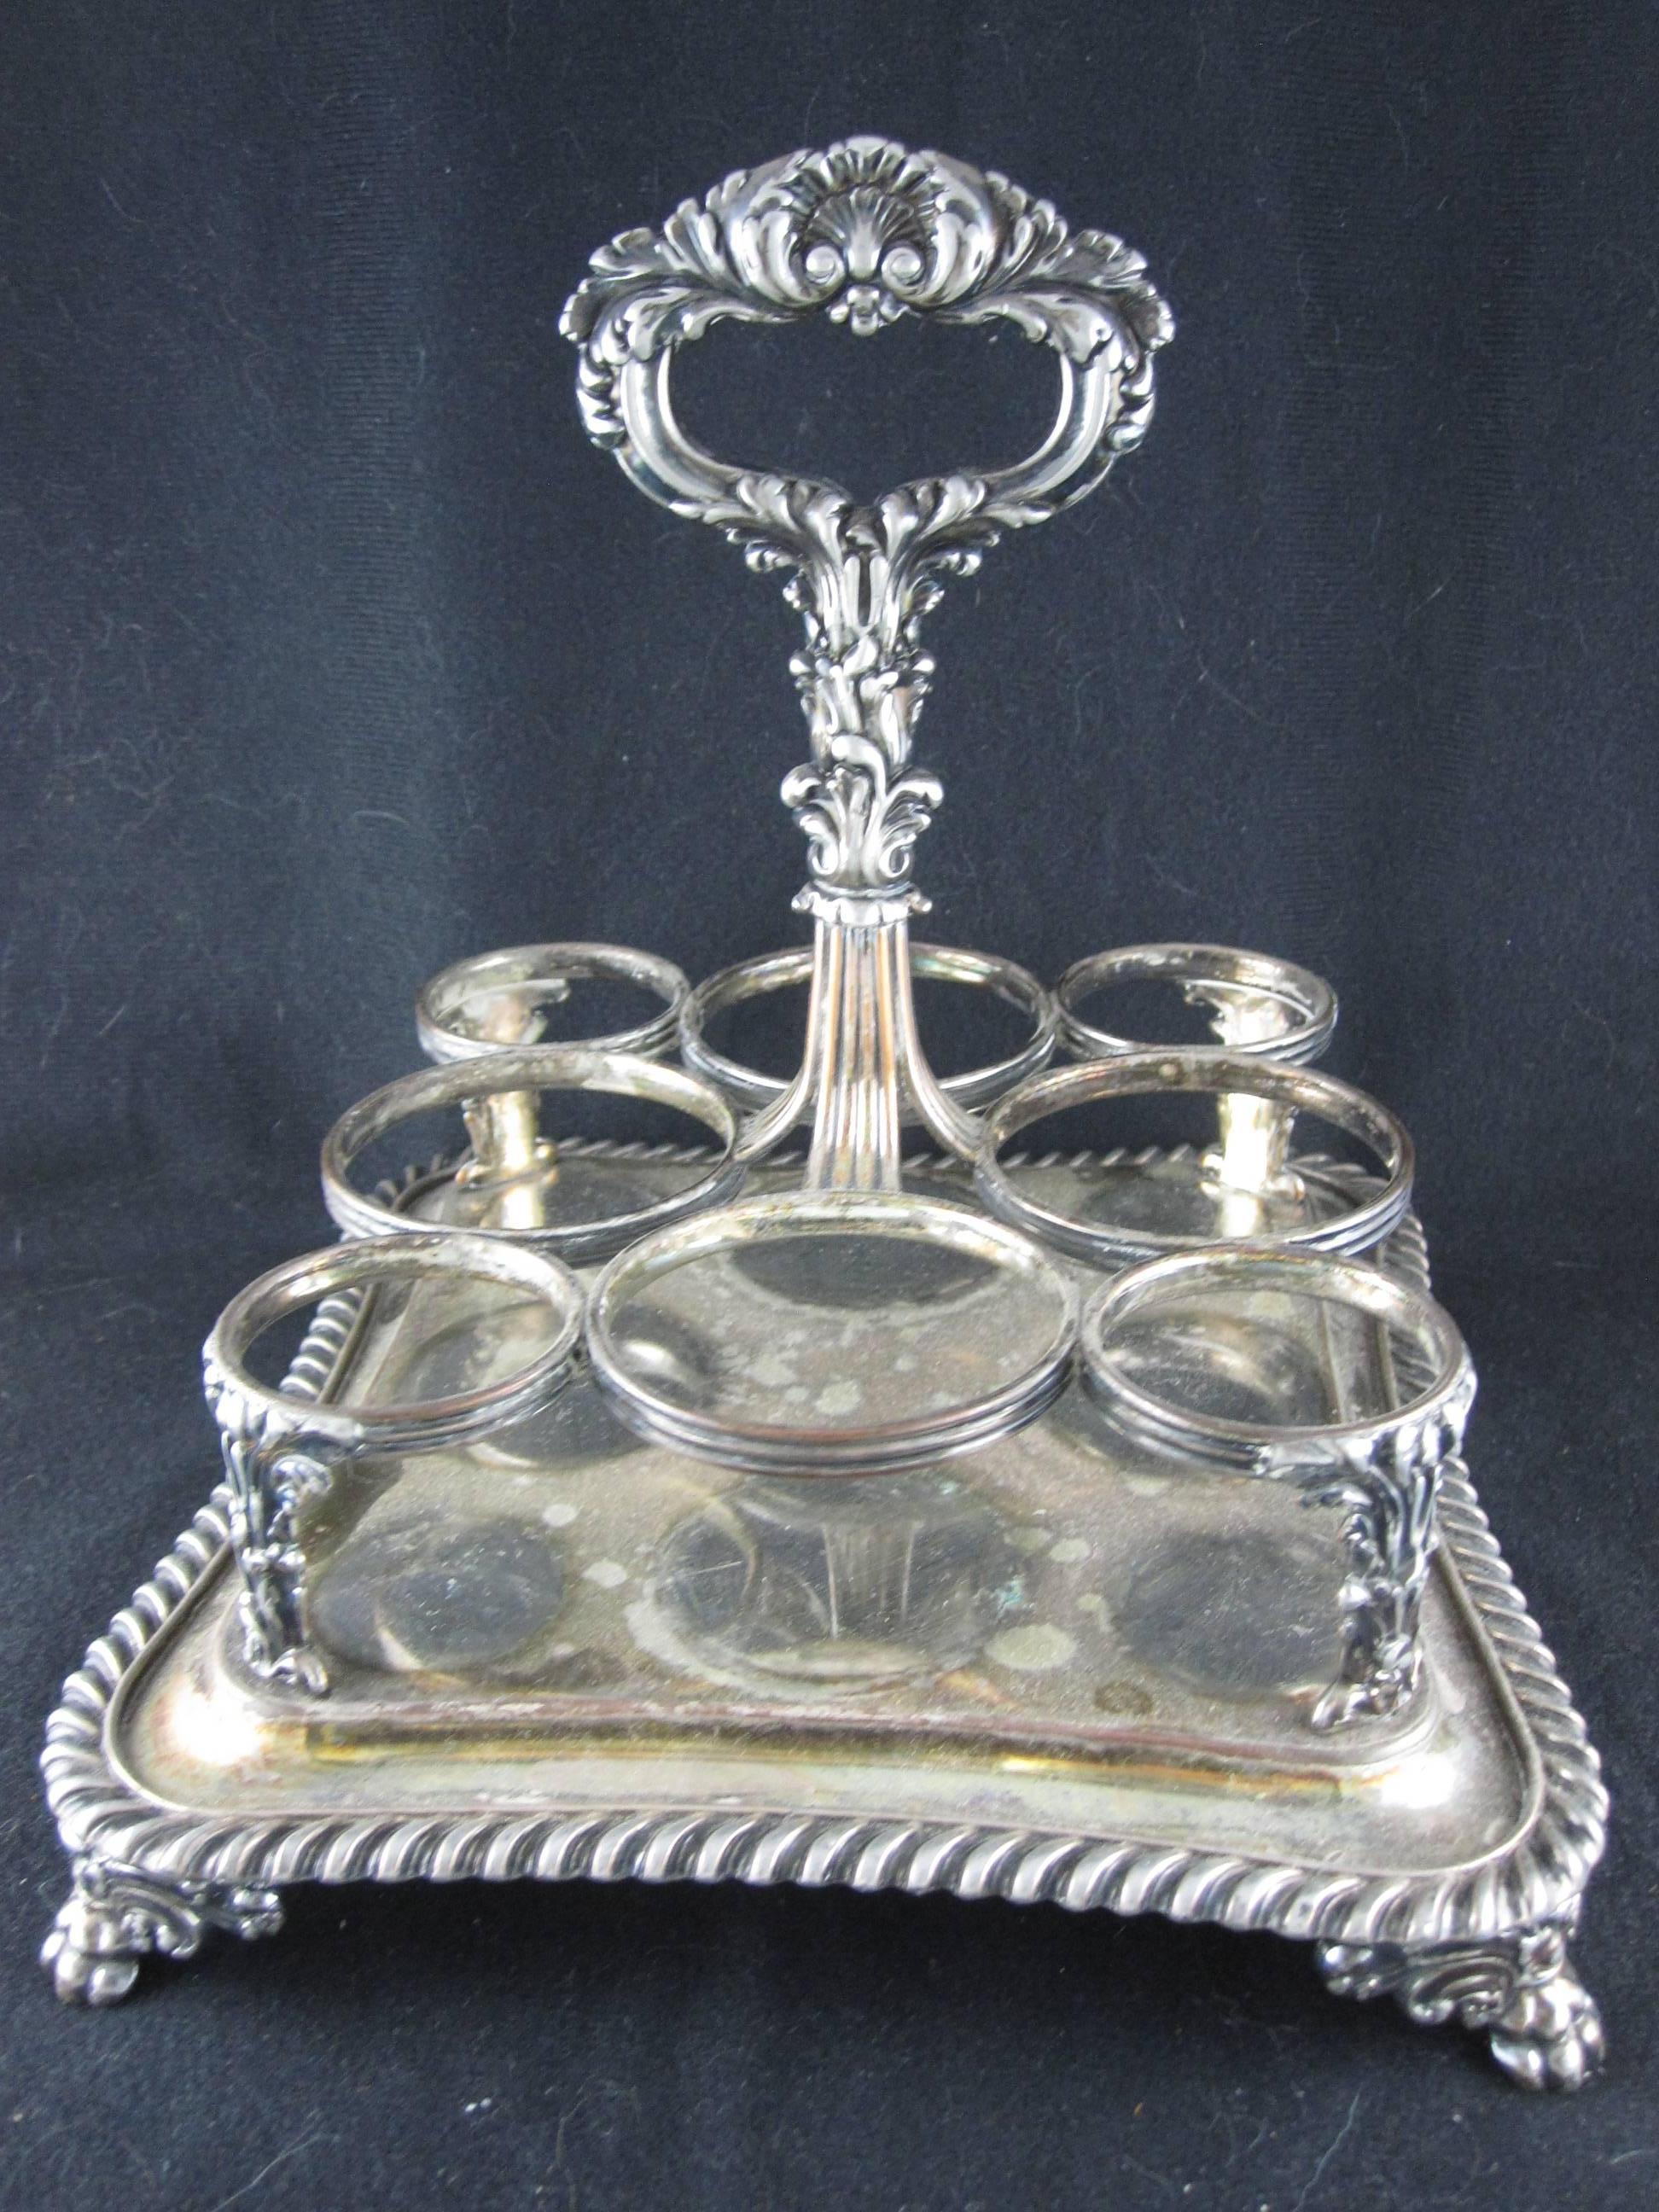 19th Century English Silver Plate and Cut-Glass Cruet Castor Service, 17 pieces 1